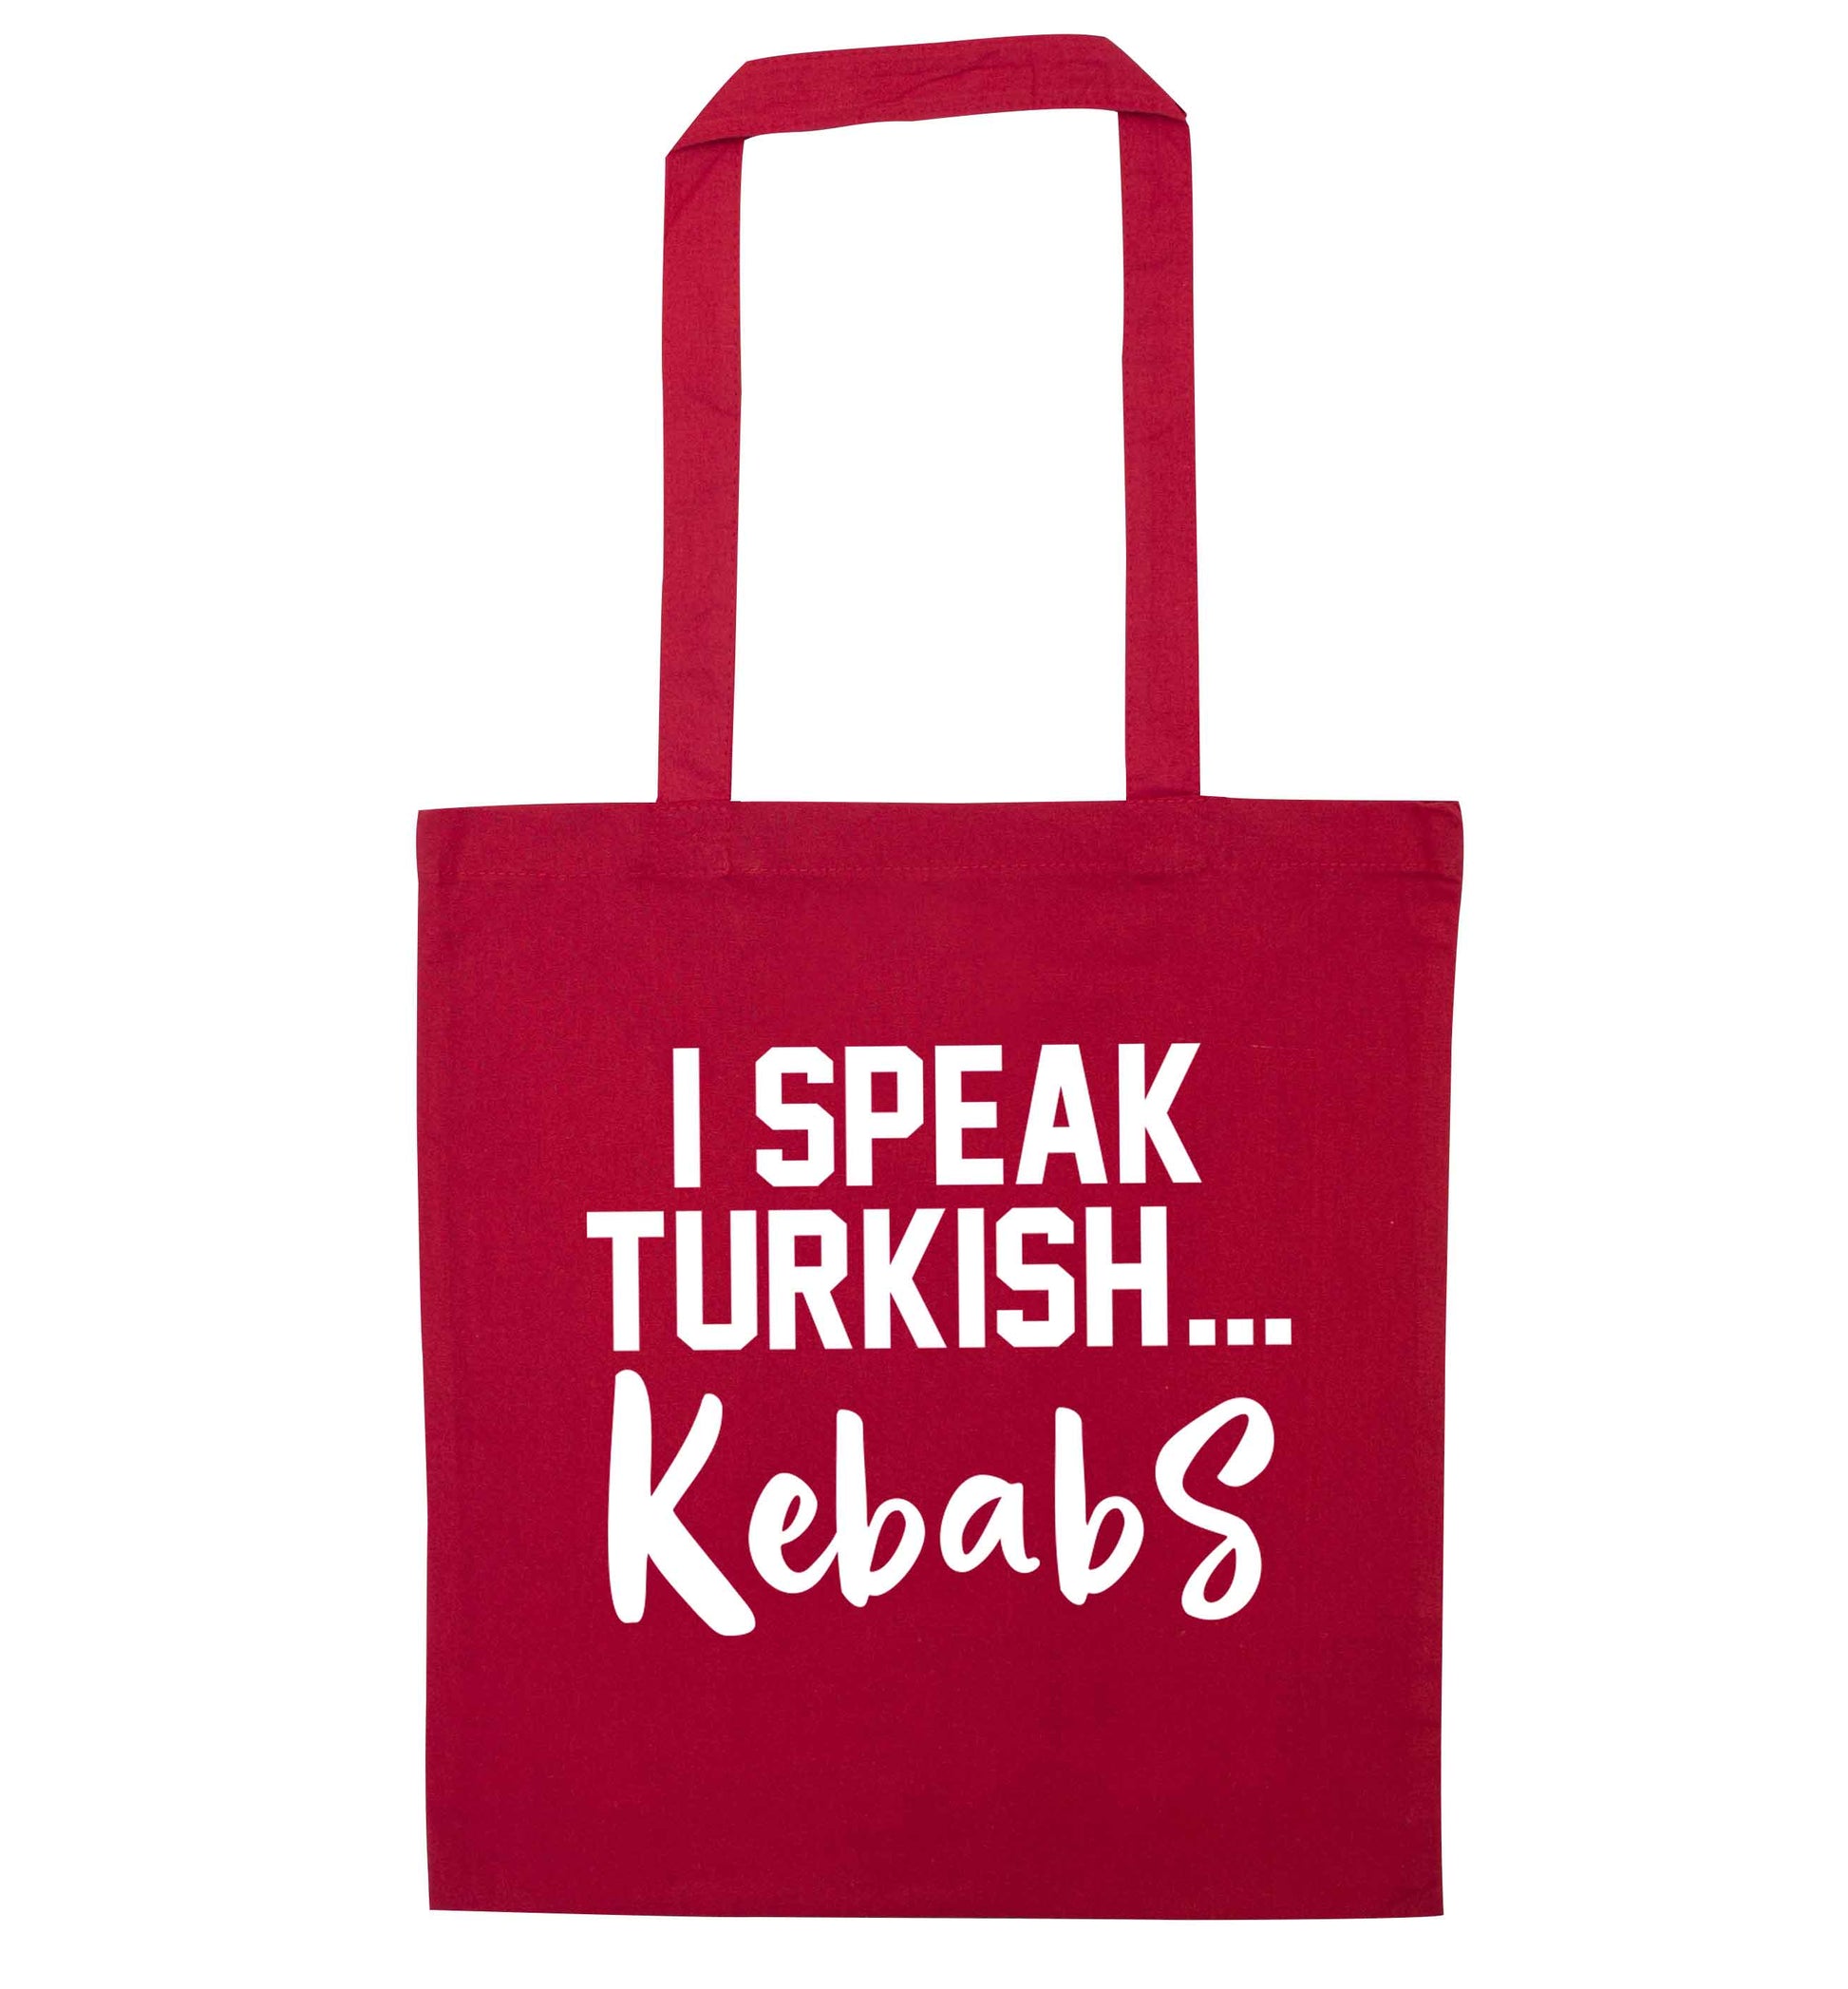 I speak Turkish...kebabs red tote bag